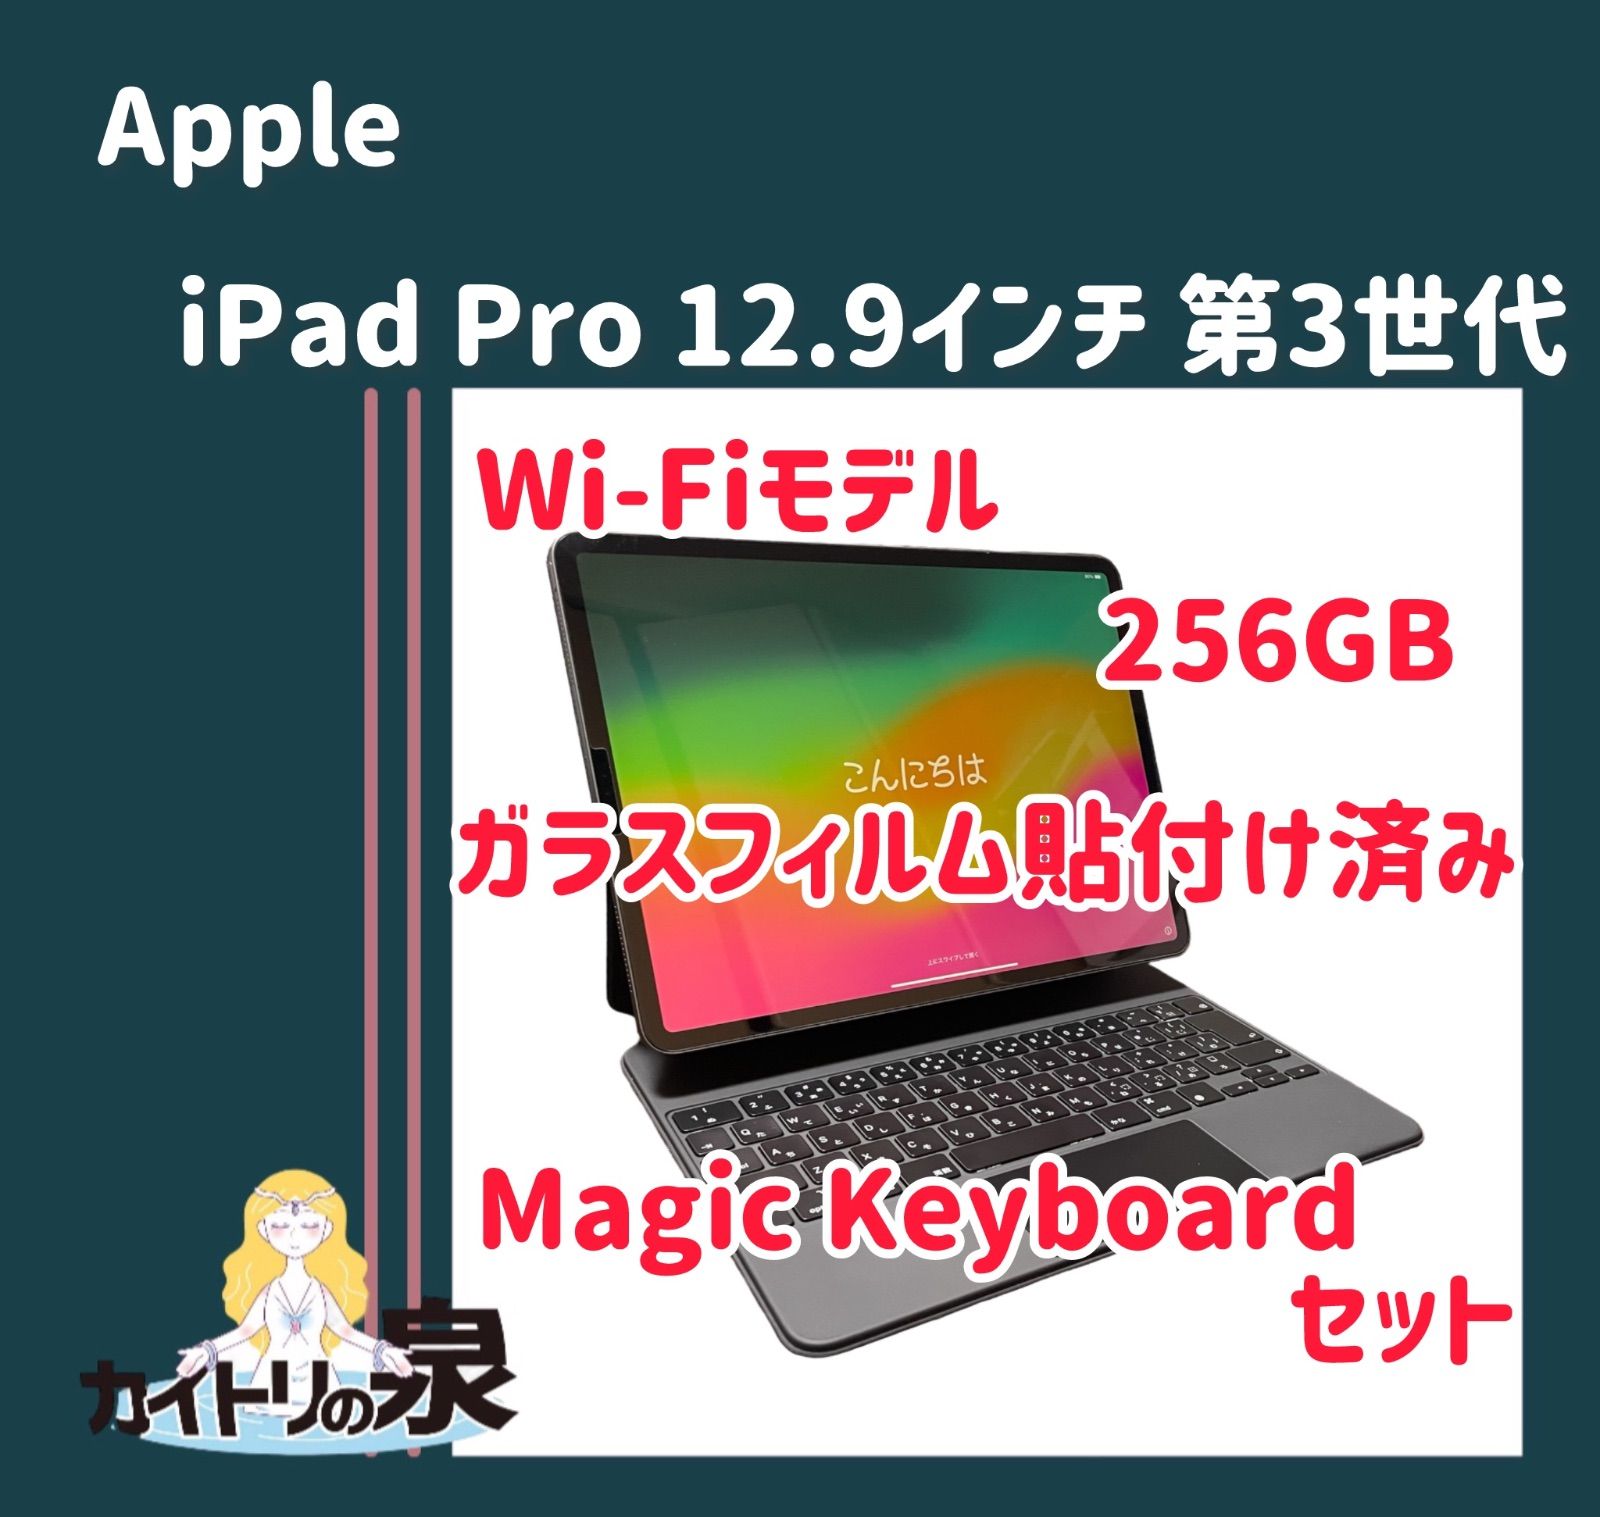 Apple iPad Pro 12.9インチ Wi-Fi 第3世代 256GB スペースグレイ Magic Keyboard セット - メルカリ